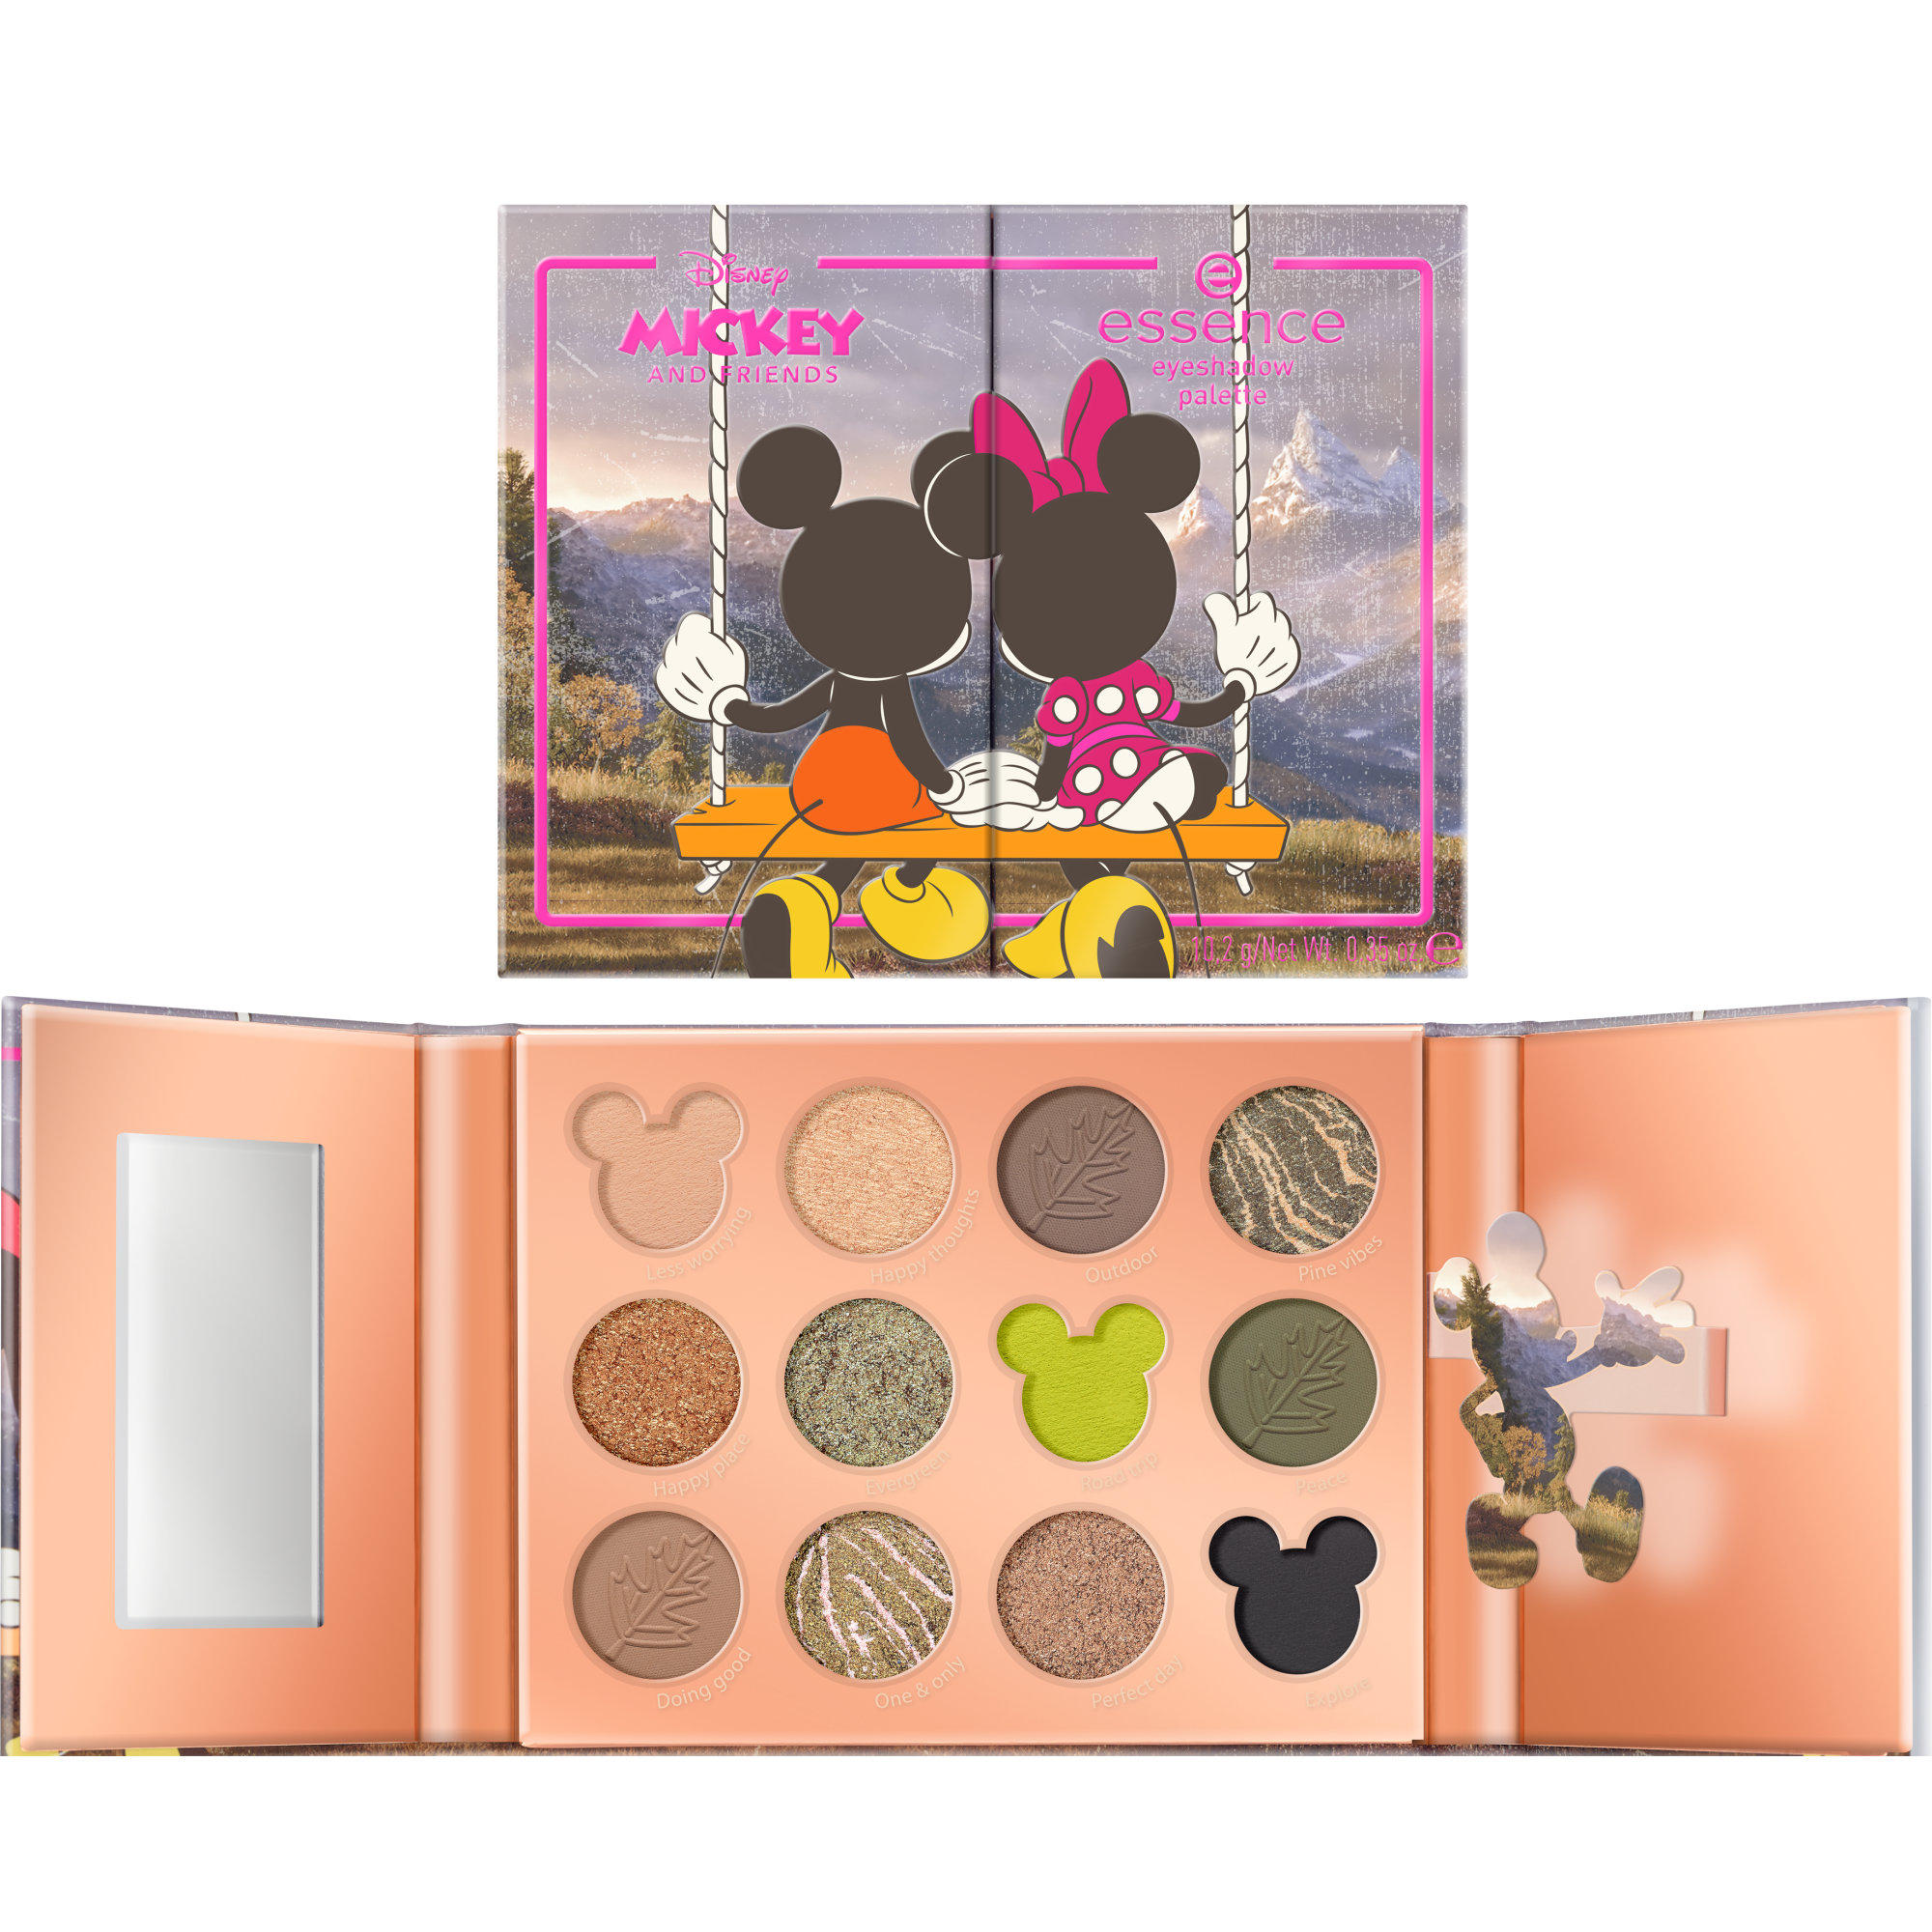 Disney Mickey and Friends eyeshadow palette